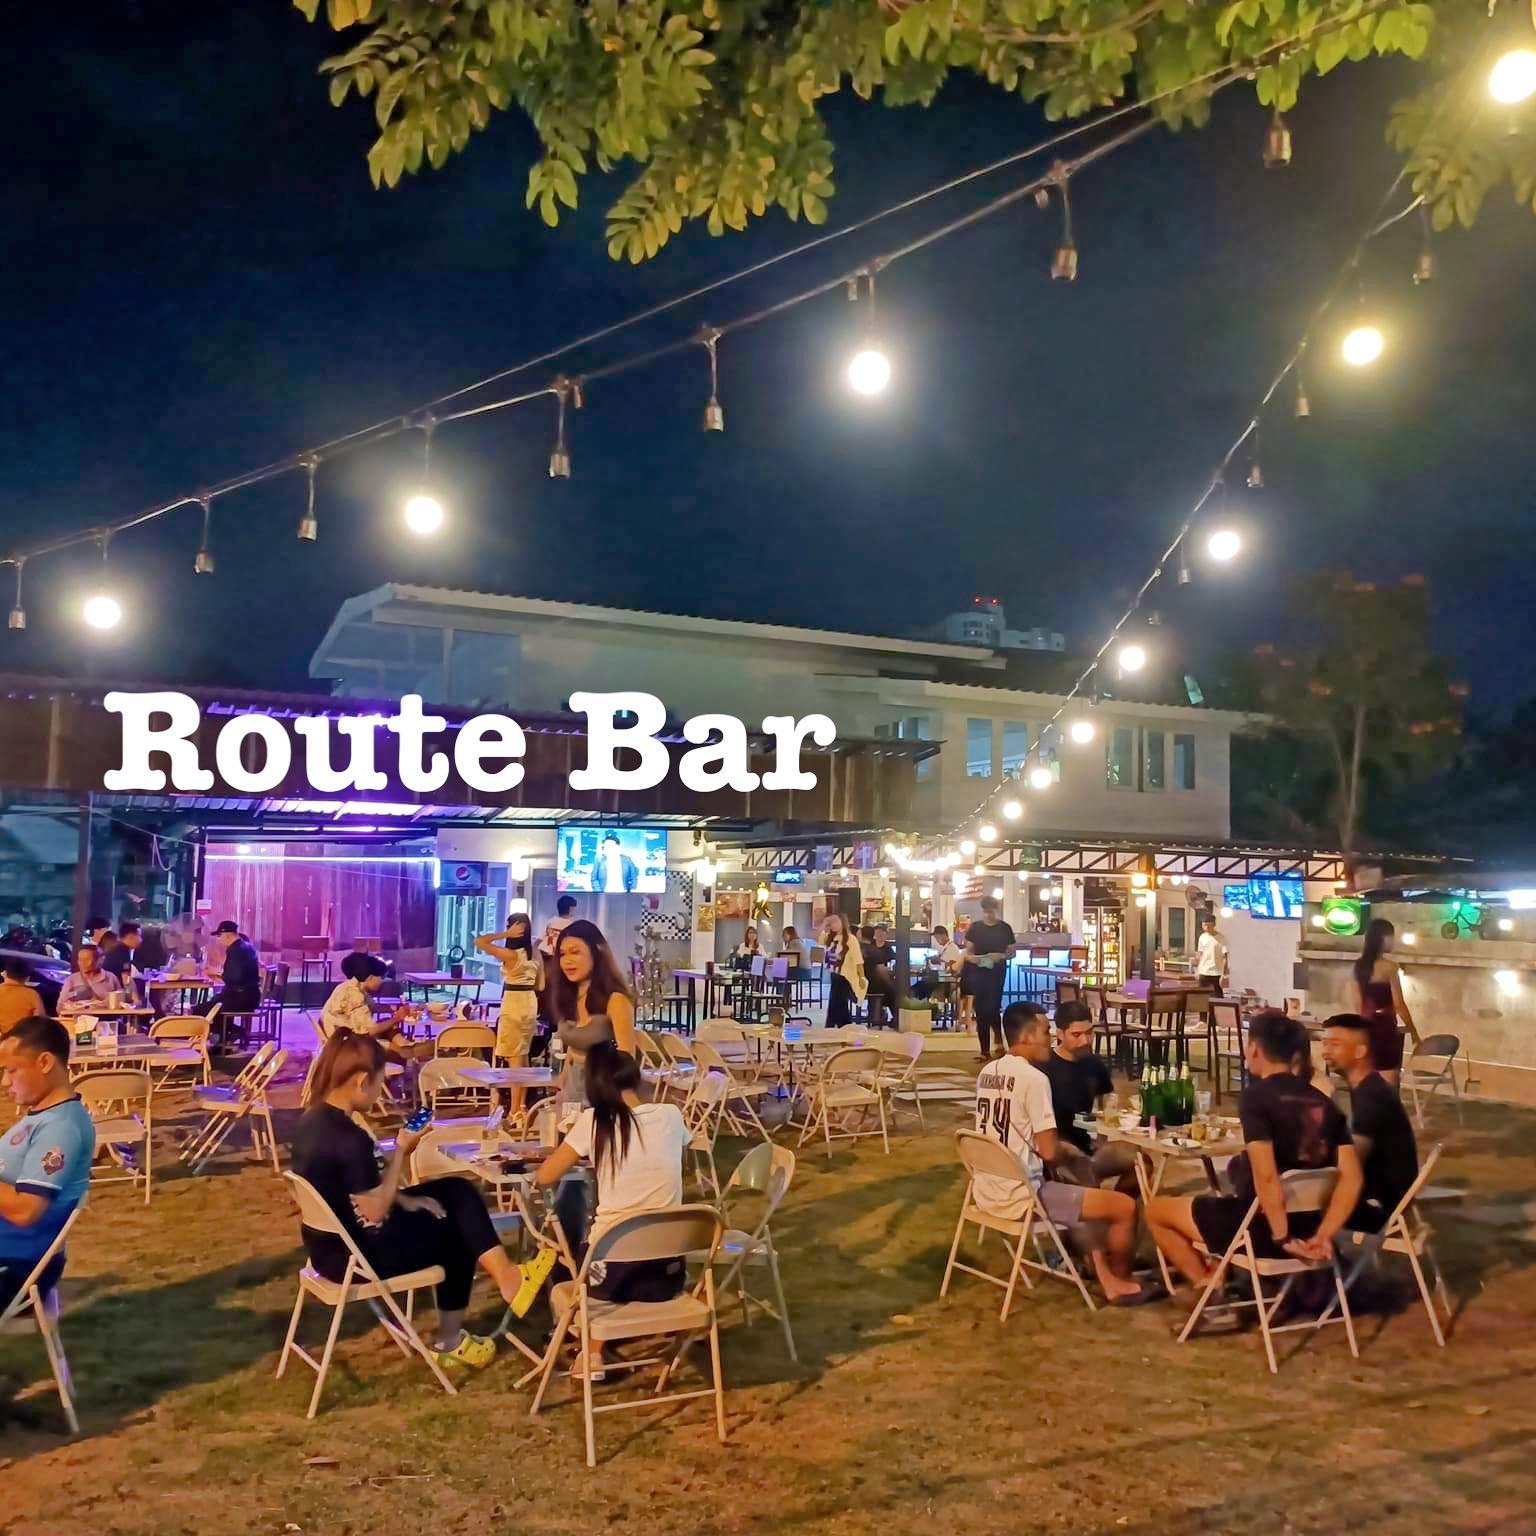 Route Bar Pub & restaurant